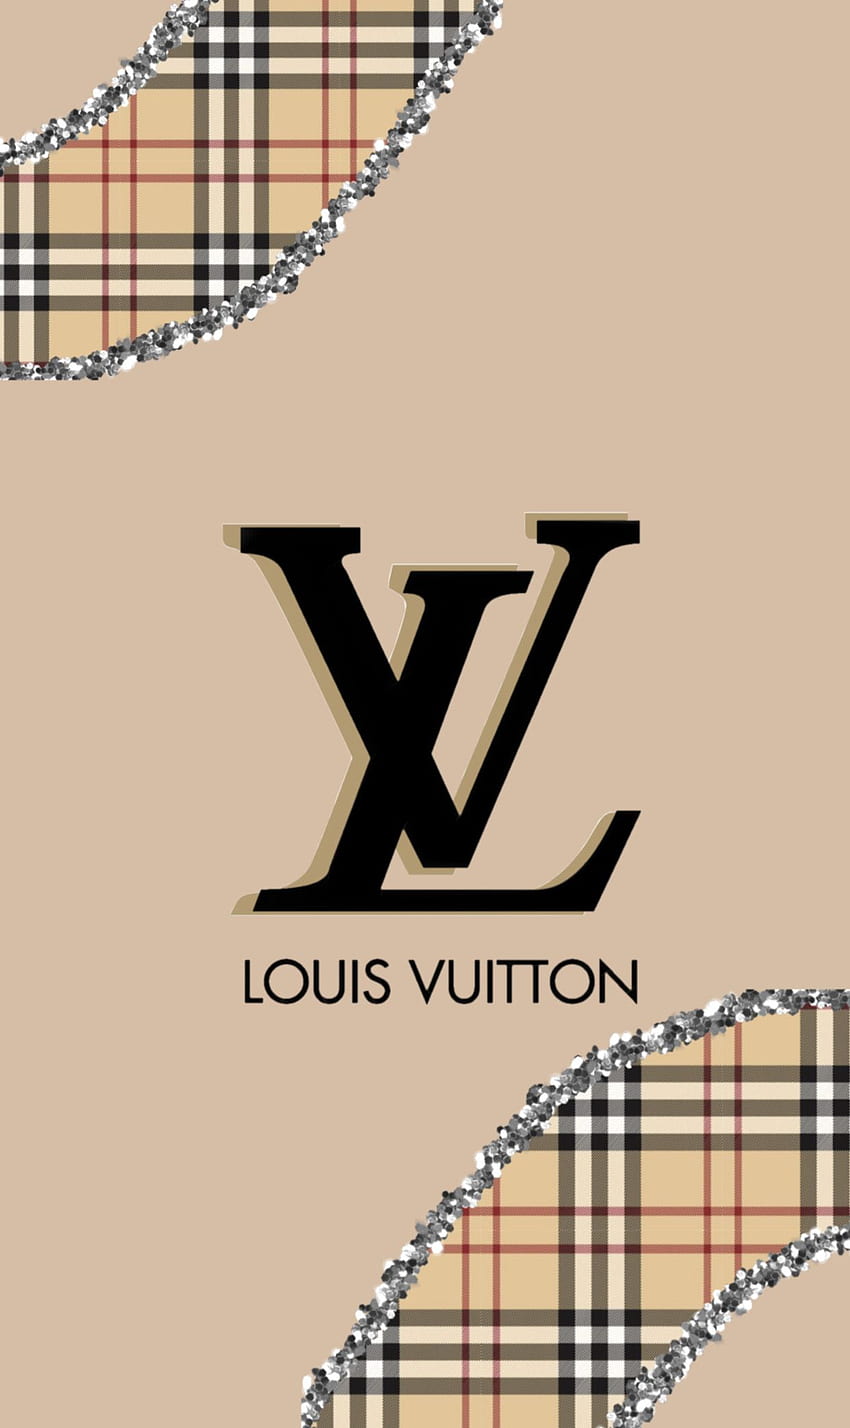 Louis Vuitton aesthetic  Behance